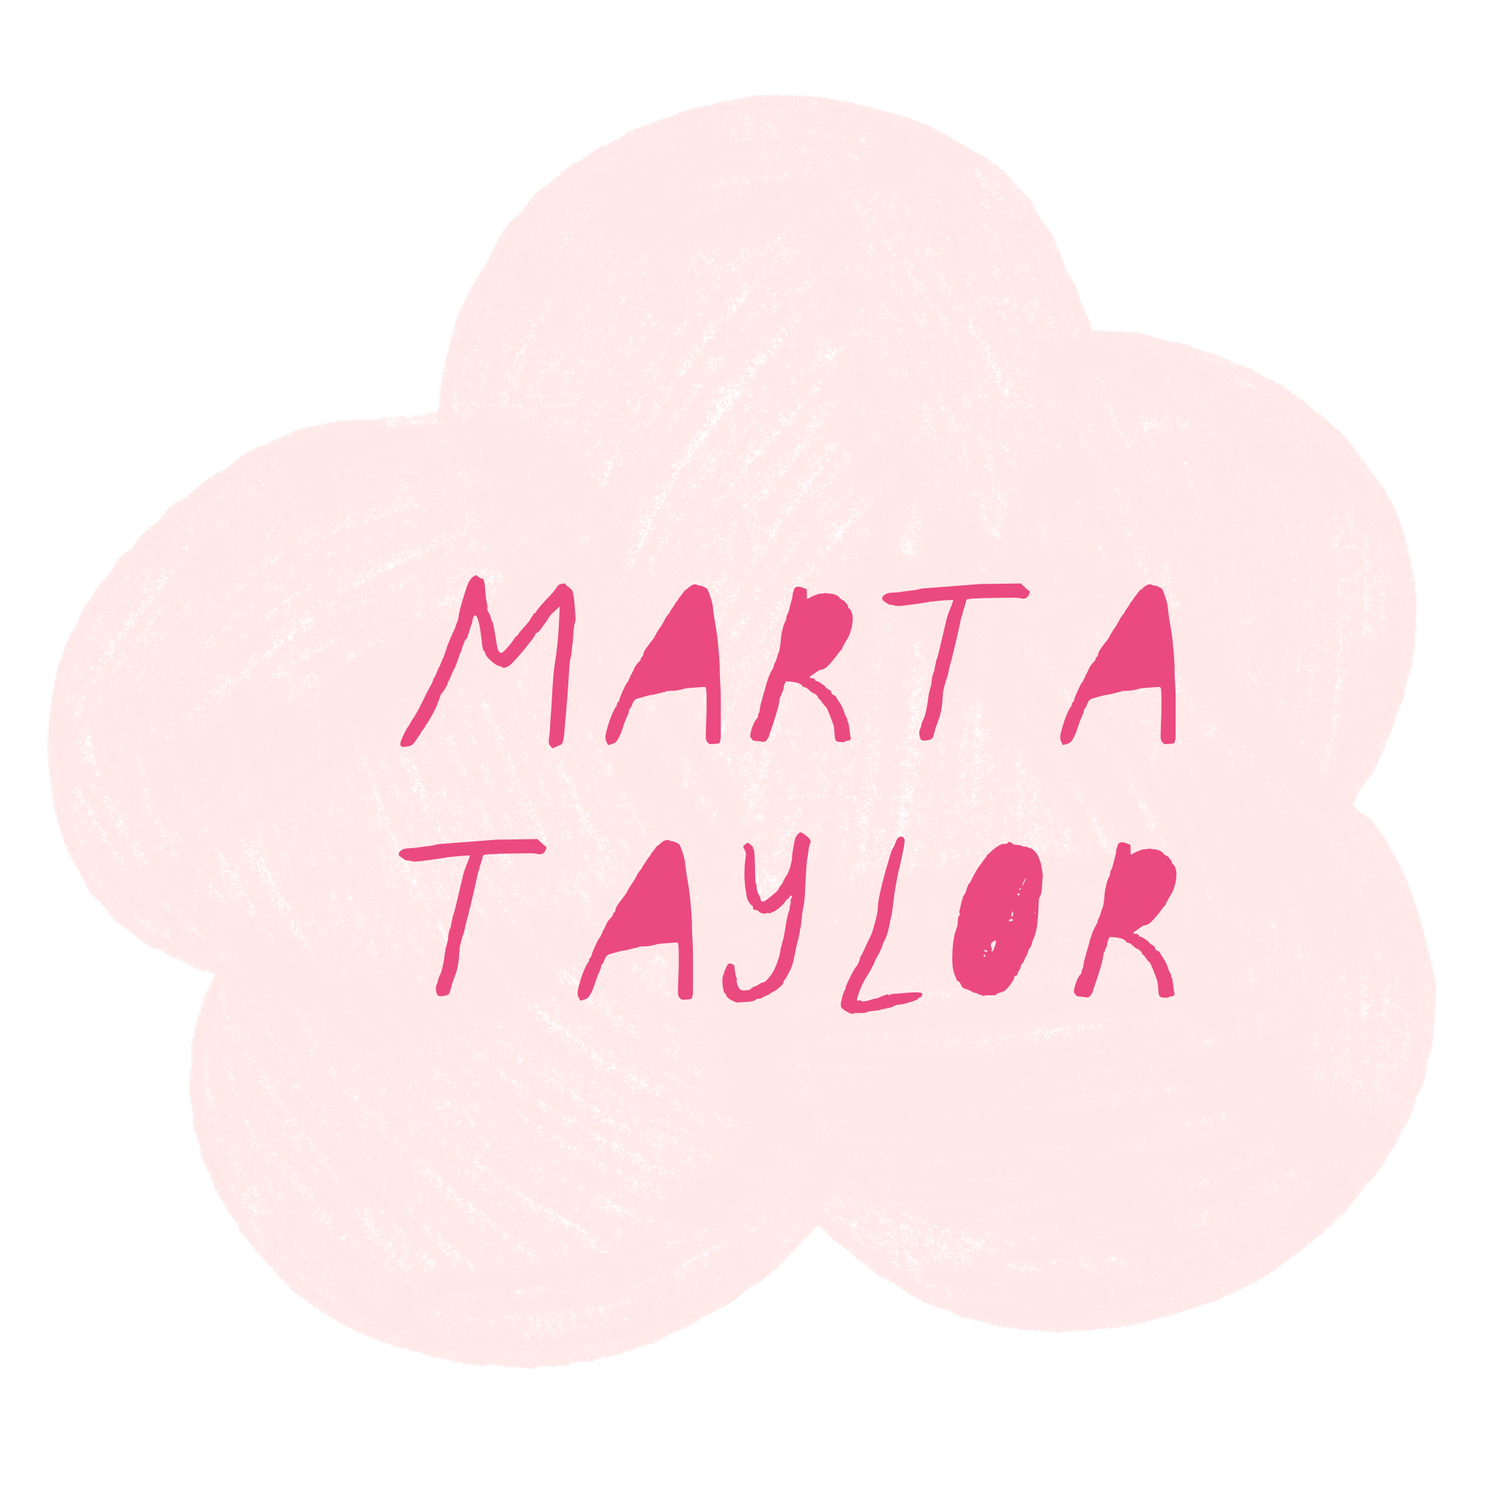 Marta Taylor